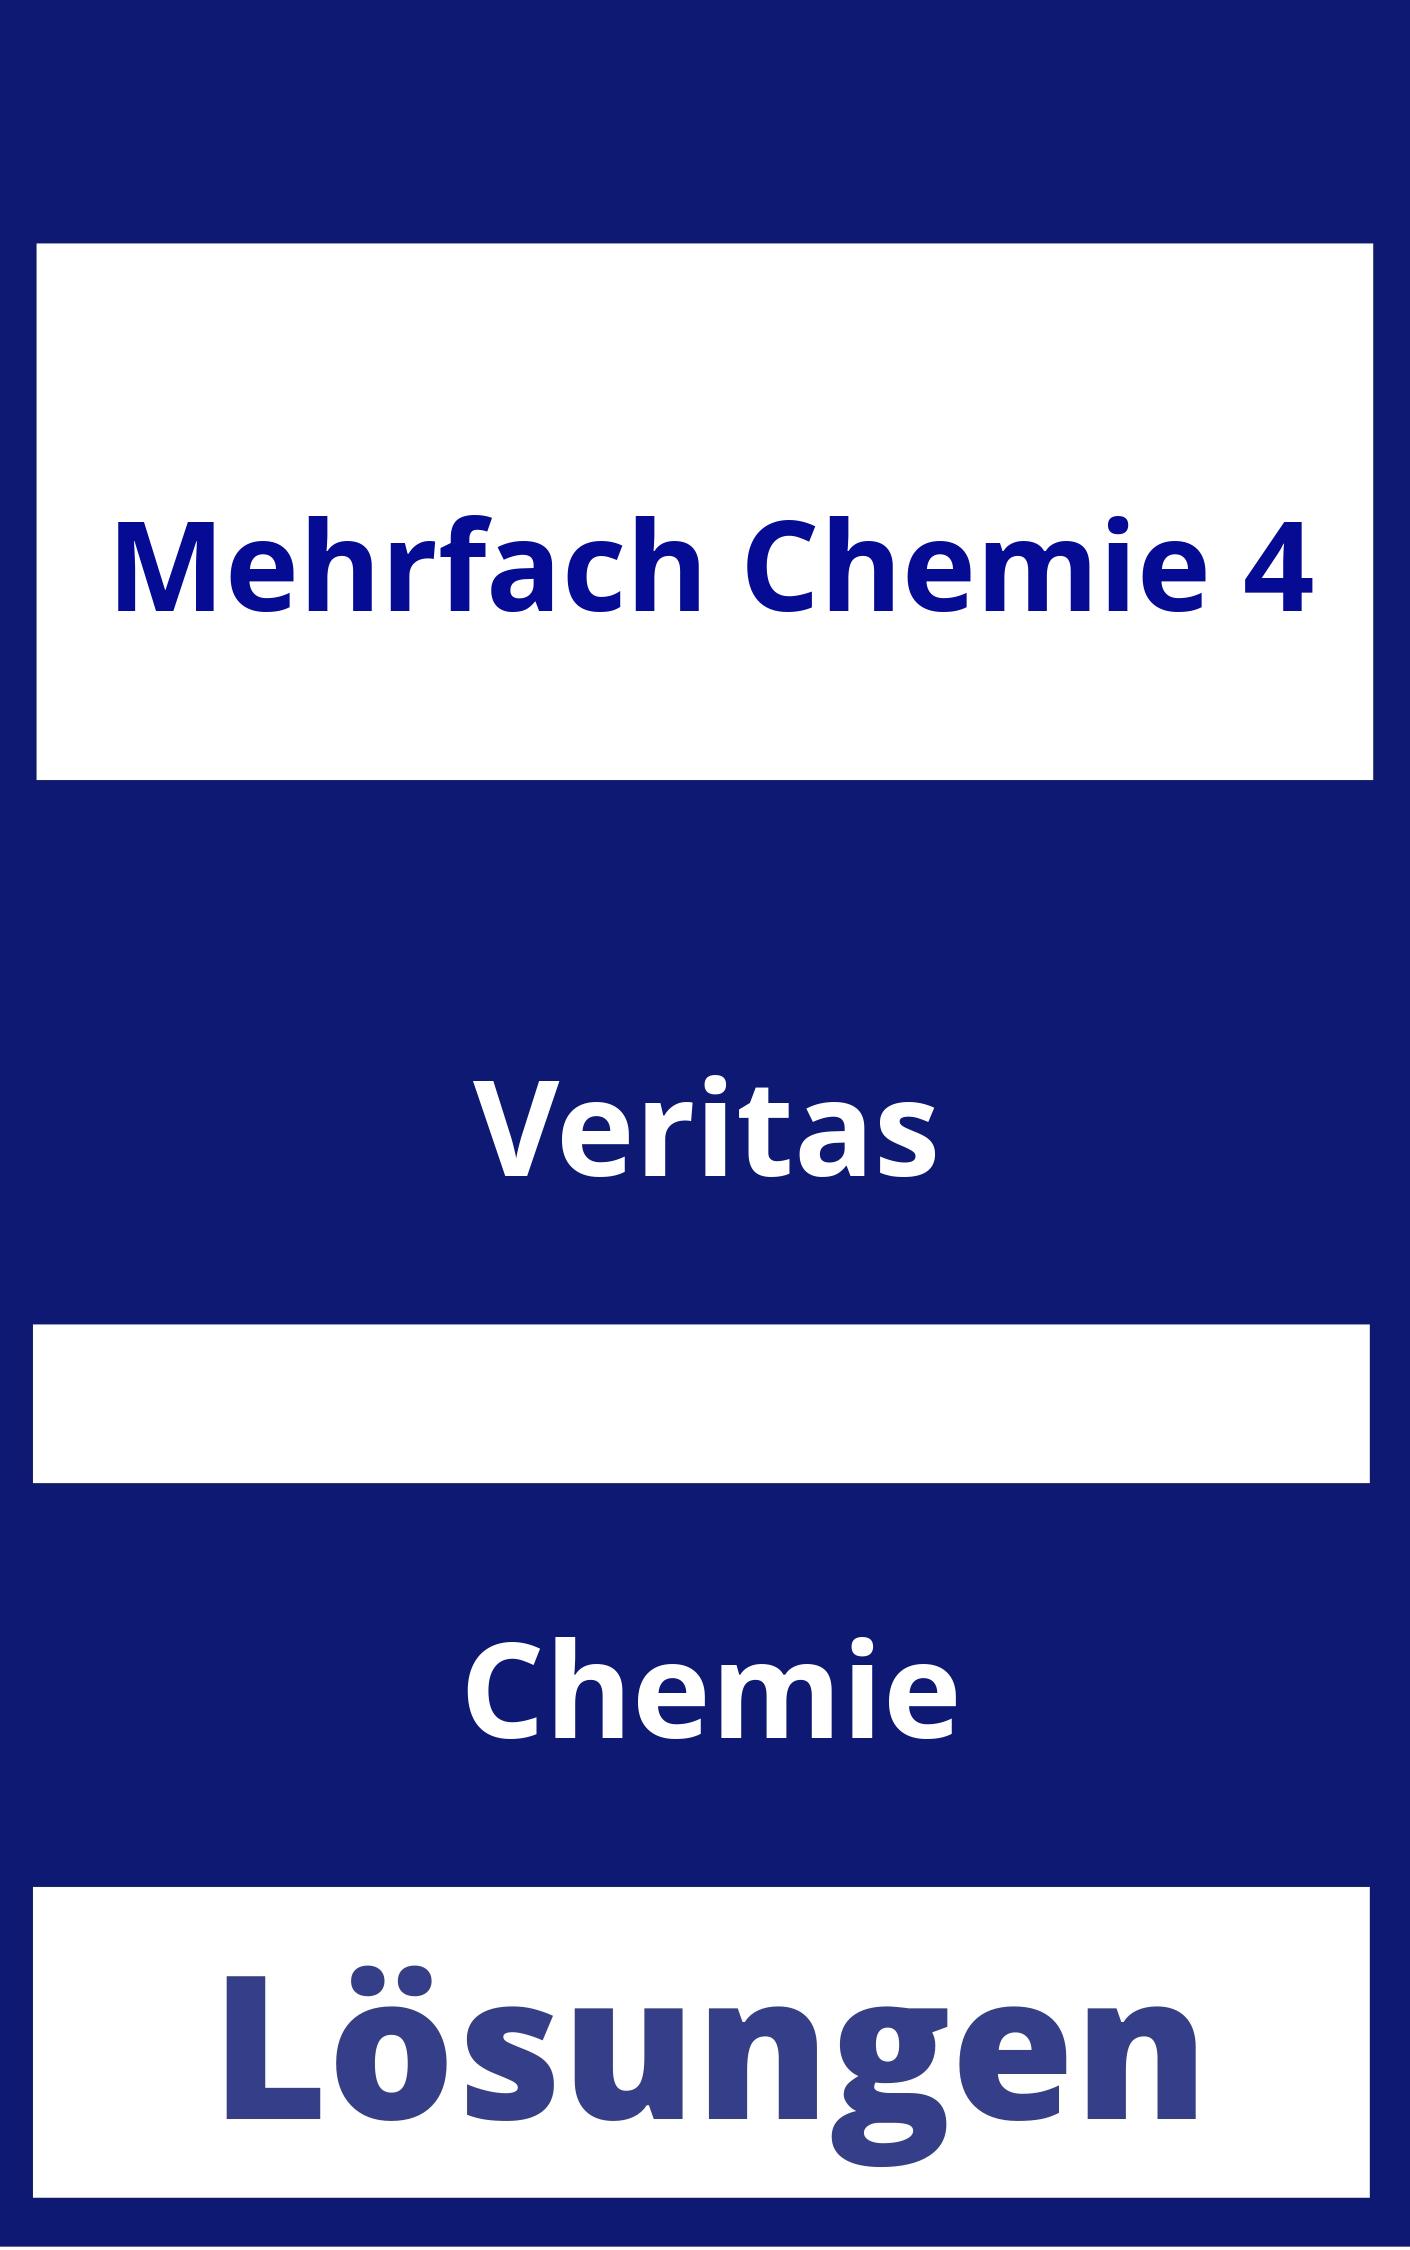 MEHRfach Chemie 4